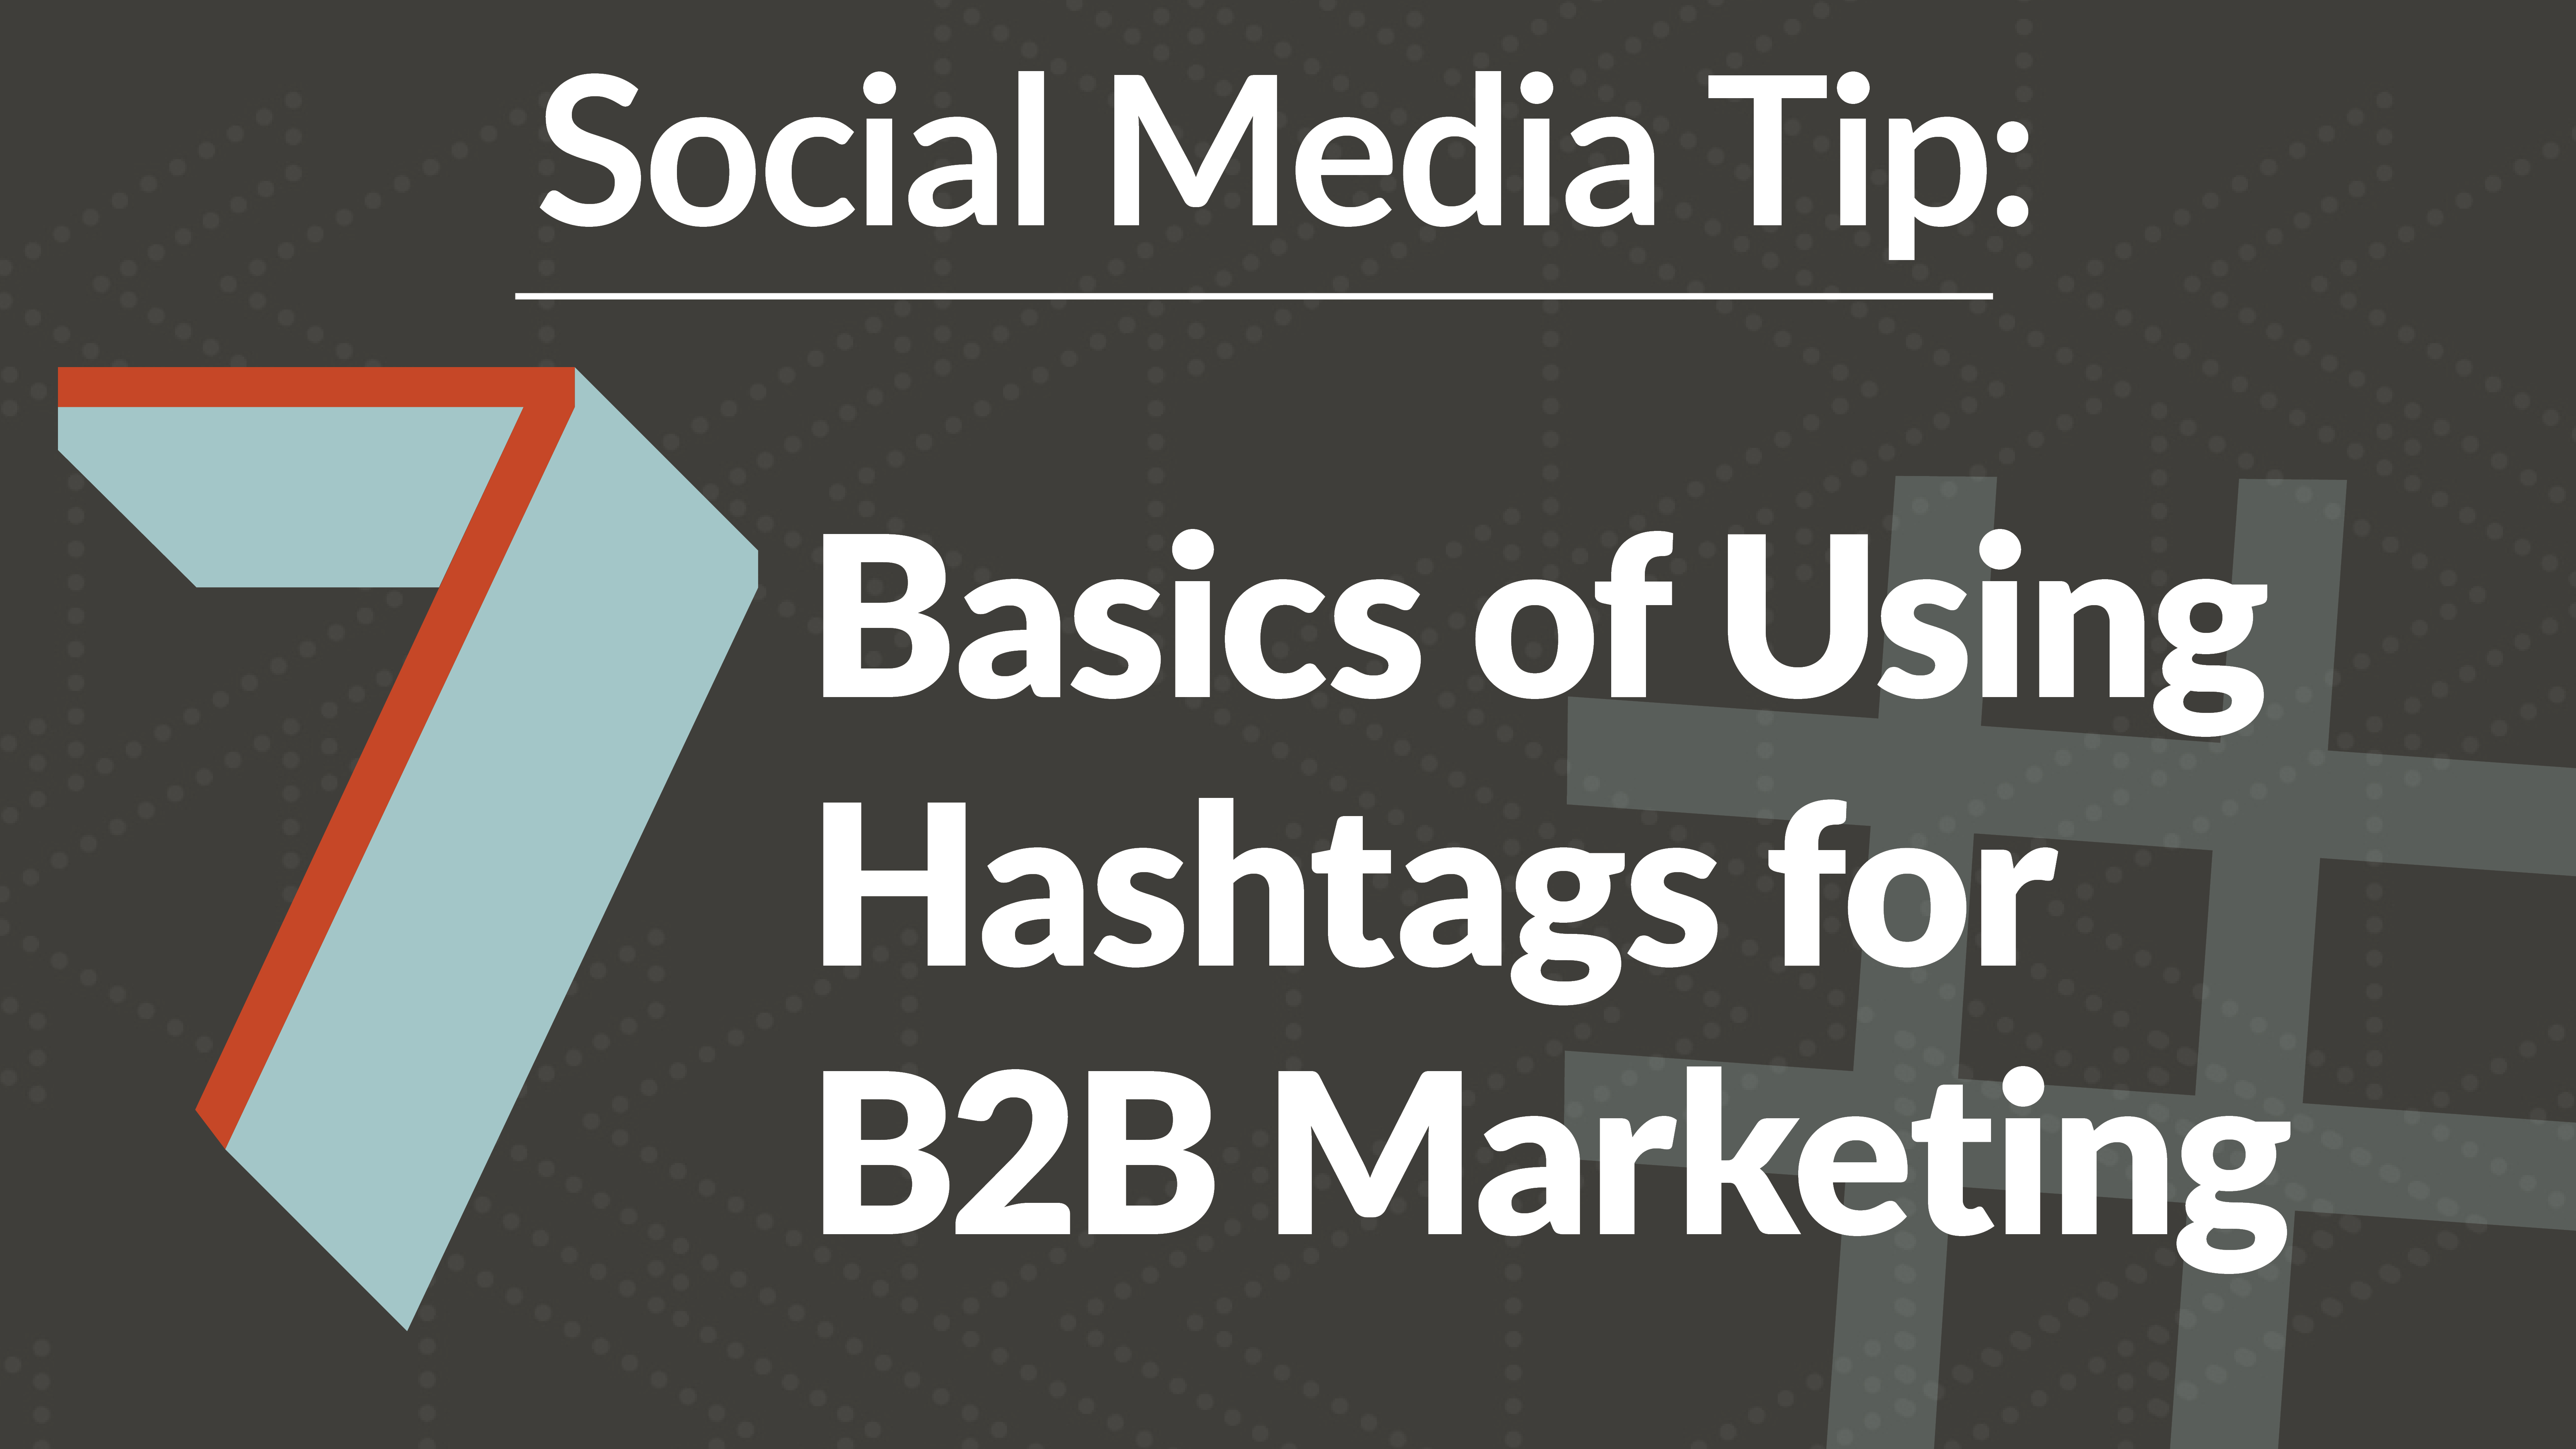 Social Media Tip: 7 Basics of Using Hashtags for B2B Marketing